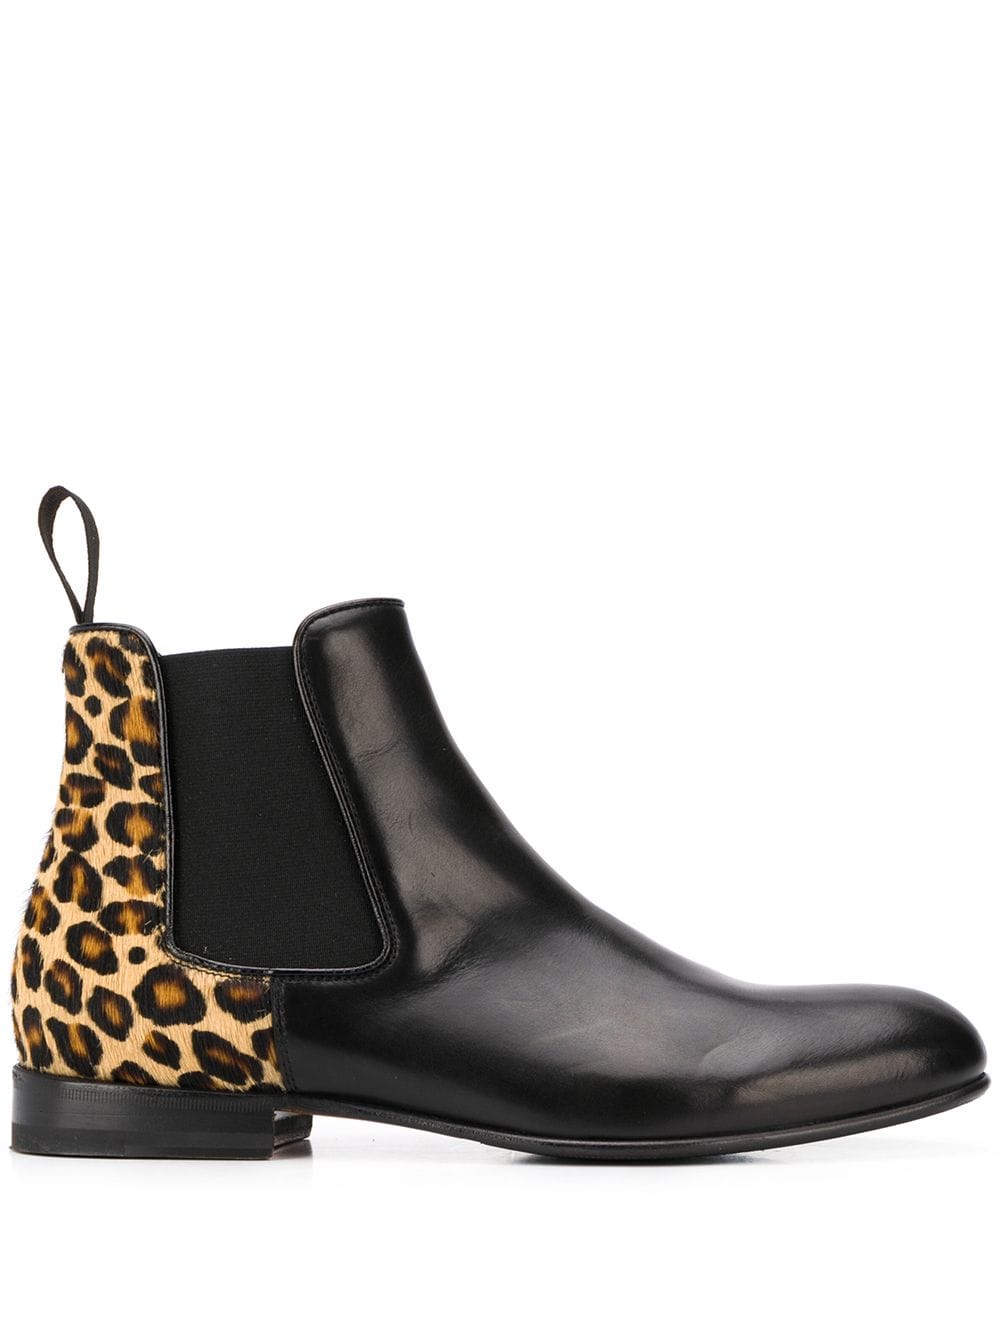 chelsea boots leopard print